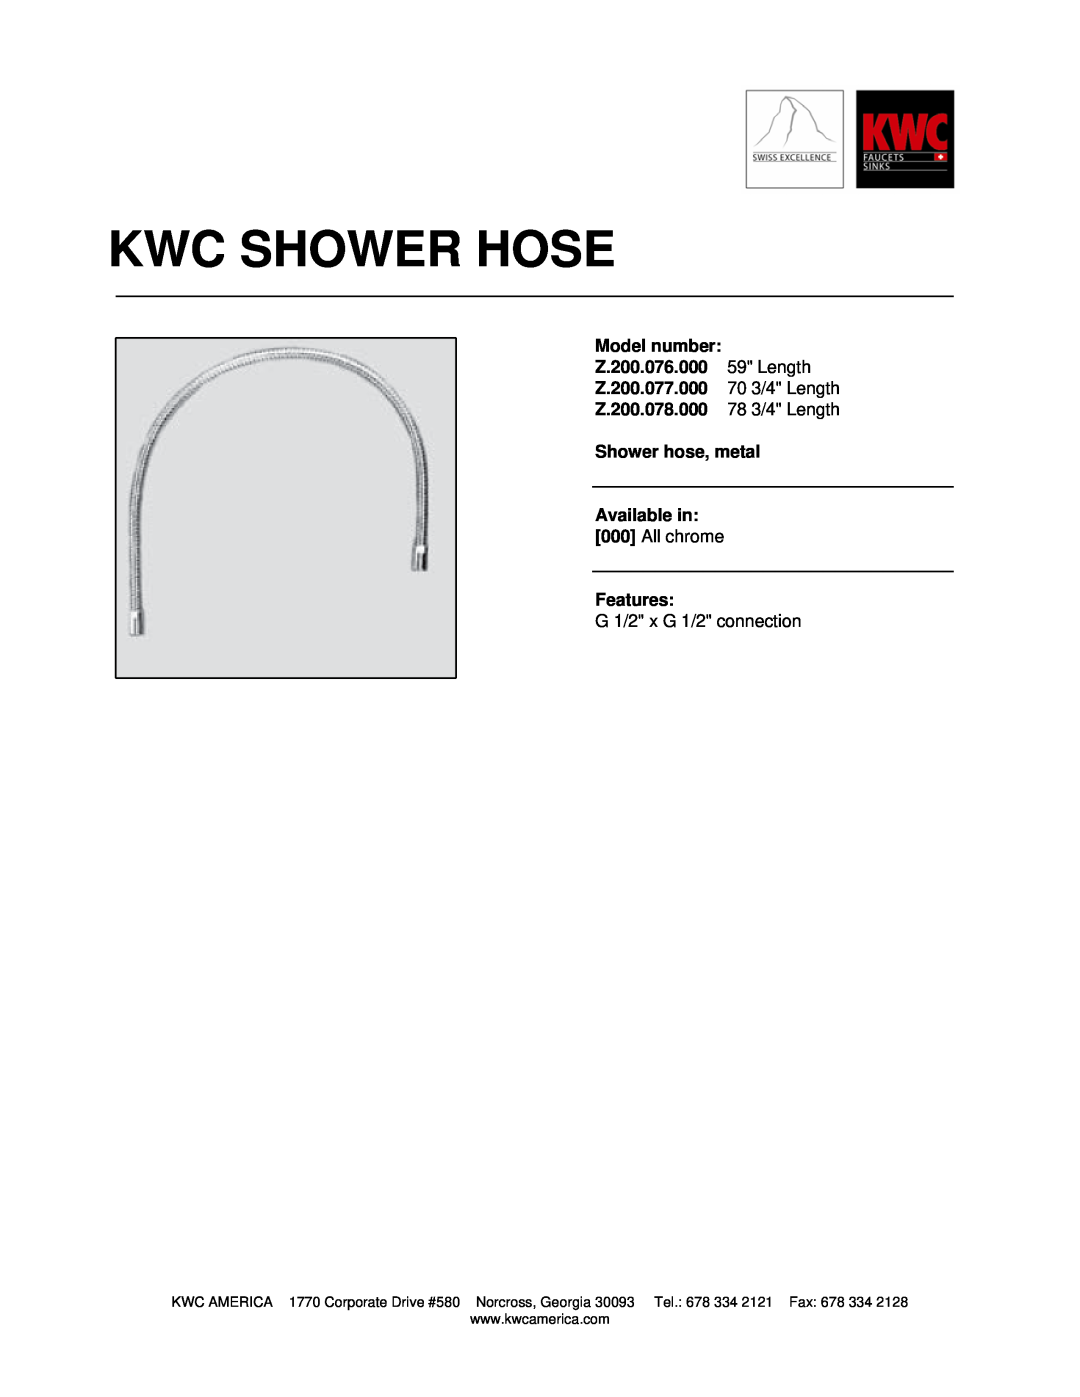 KWC Z.200.077.000 manual Kwc Shower Hose, Model number, Z.200.076.000, 70 3/4 Length, Z.200.078.000, 78 3/4 Length 